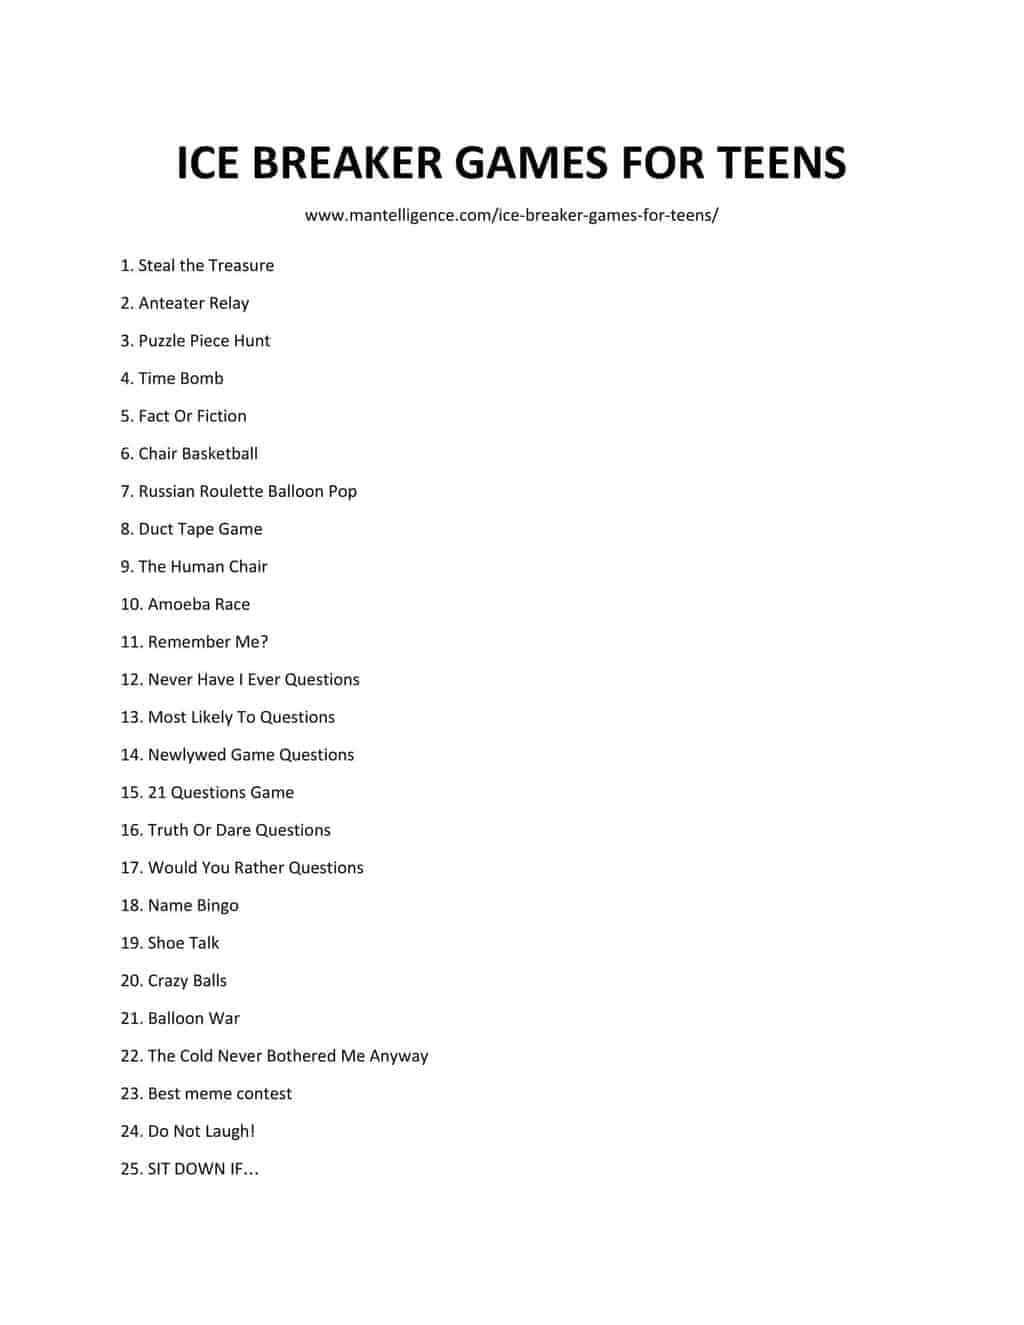 26 Fun Games to Play When Bored - IcebreakerIdeas